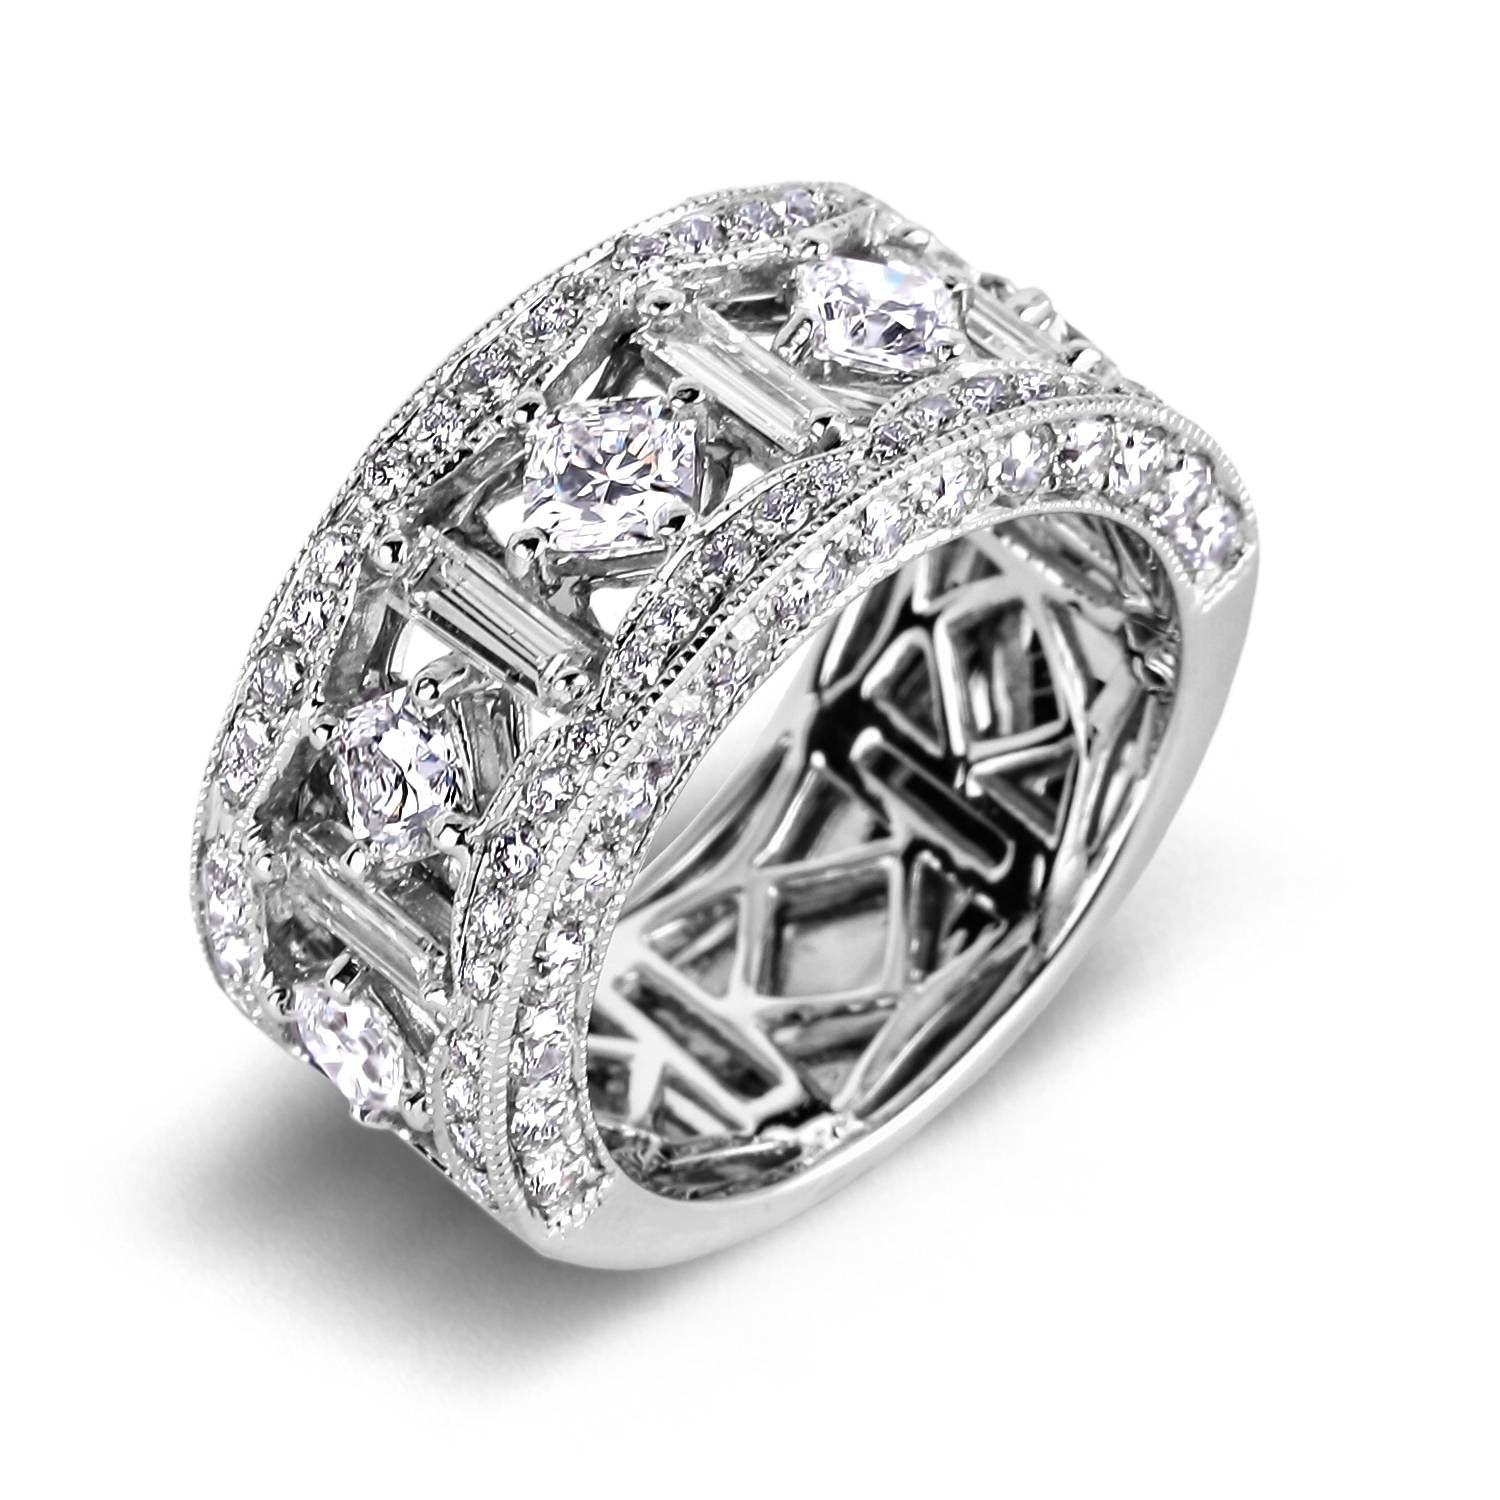 Wedding Anniversary Rings Diamonds | Wedding Ideas Regarding Most Popular 20 Year Wedding Anniversary Rings (View 5 of 15)